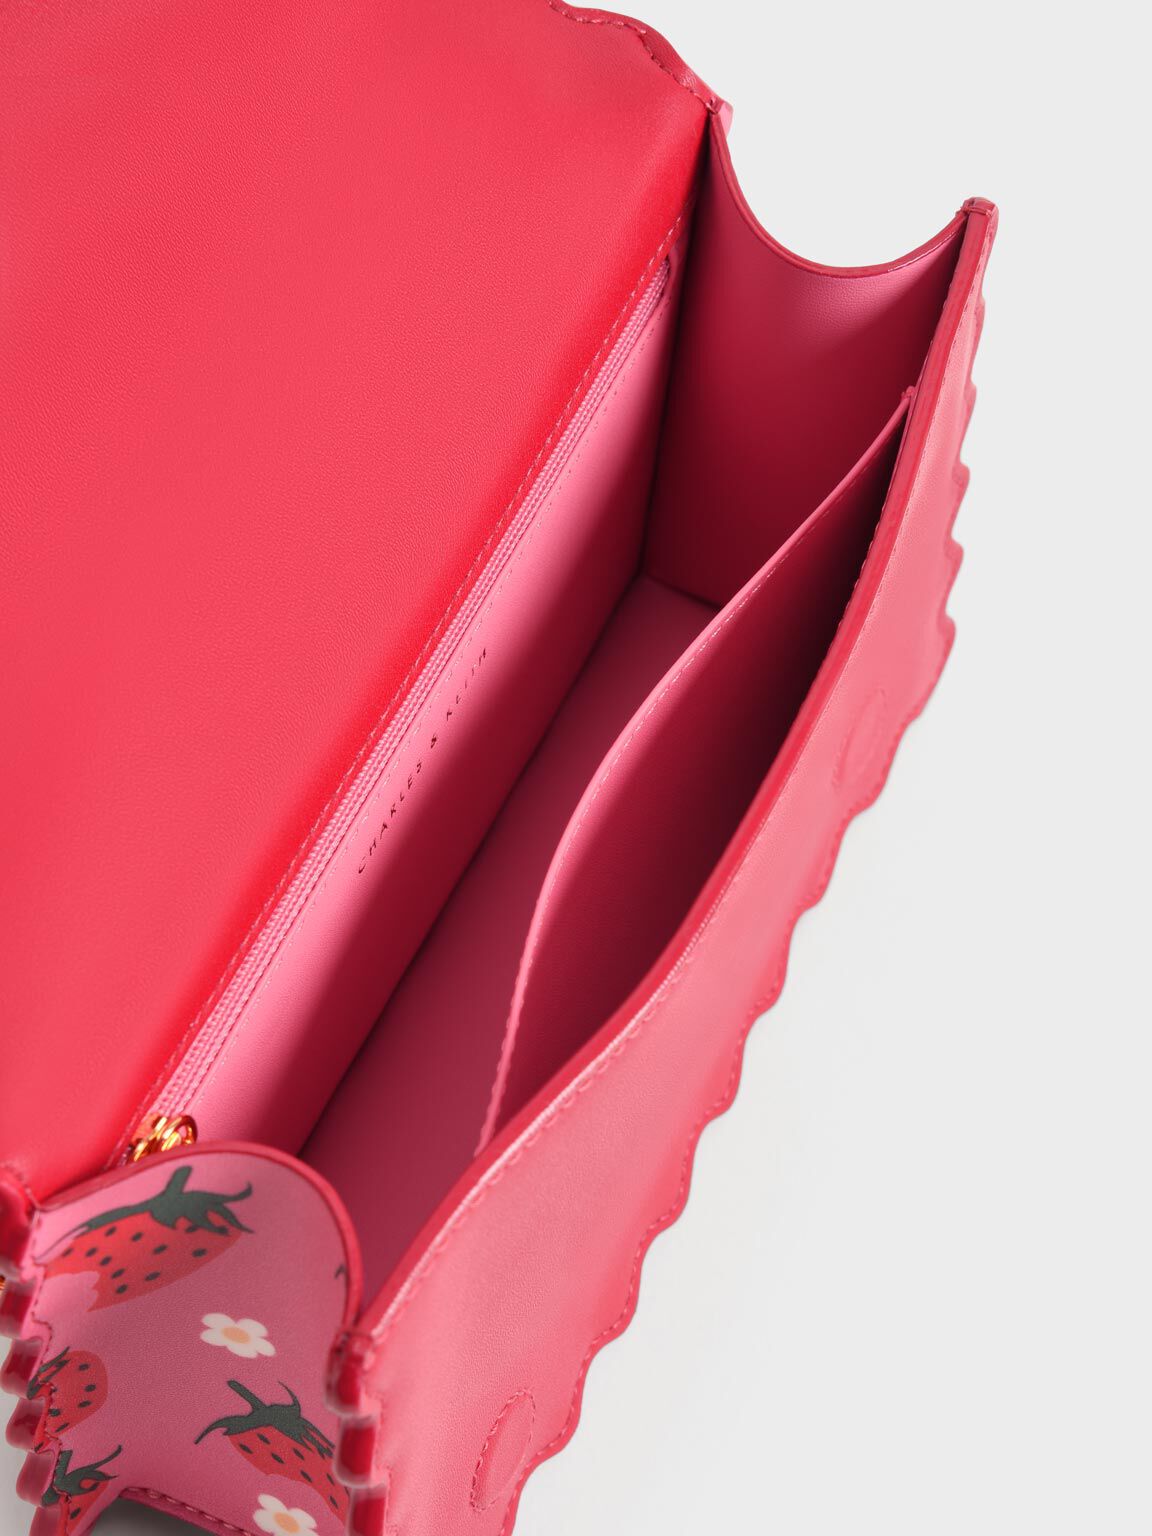 Rowan Beaded Strawberry-Print Chain Handle Bag, Pink, hi-res